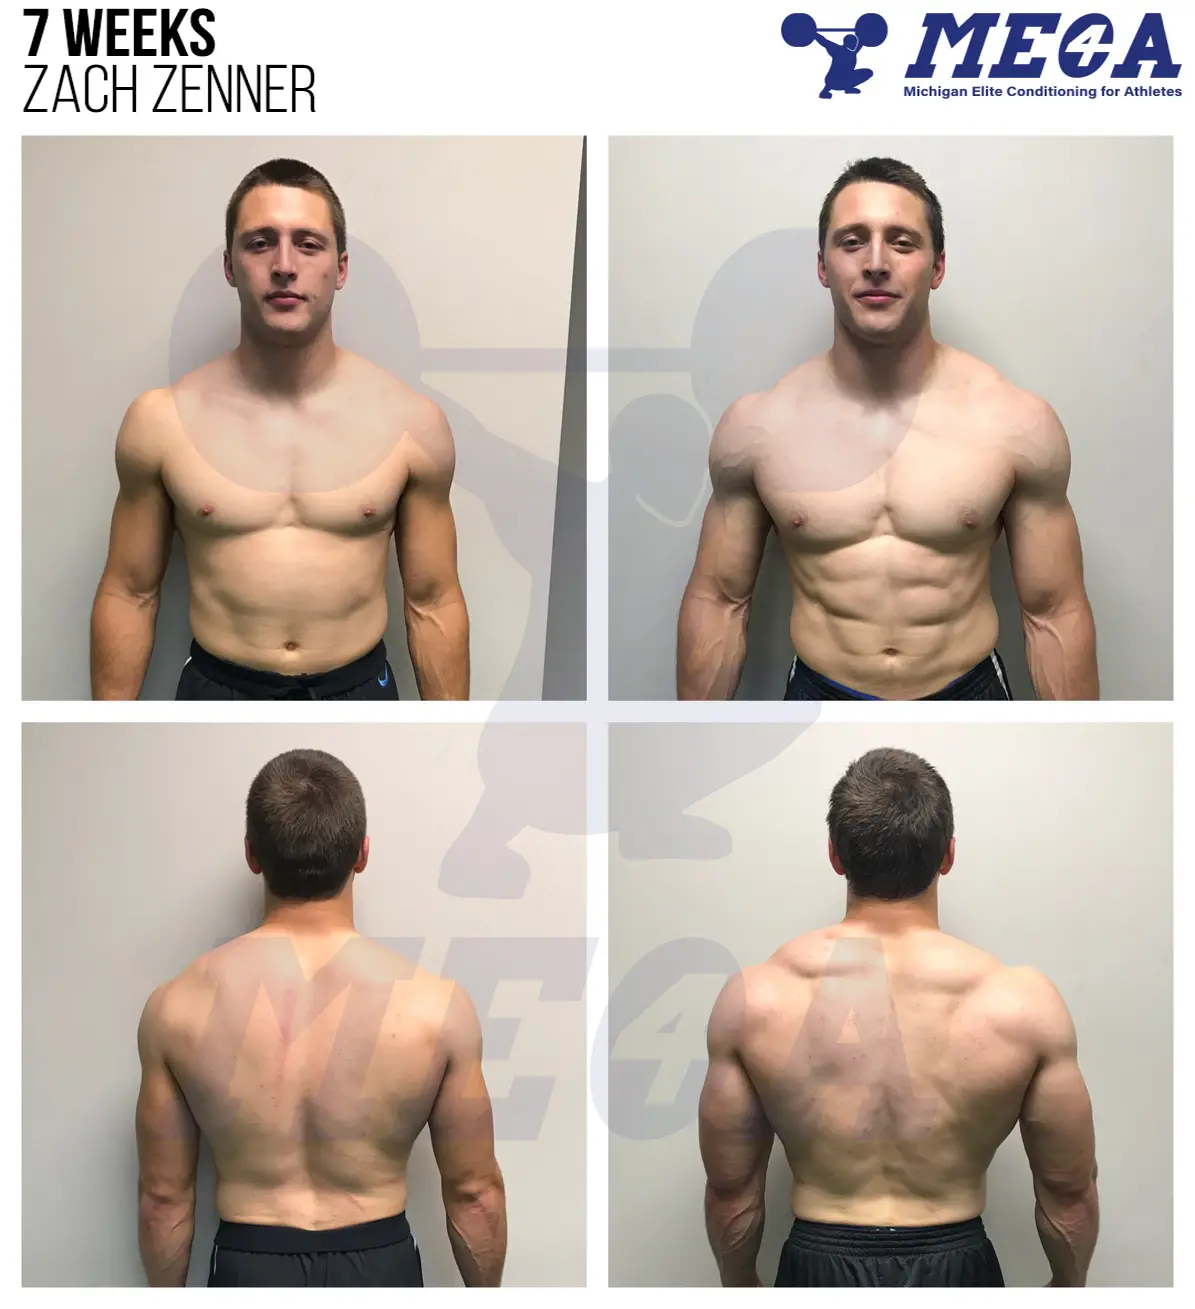 Zach Zenner